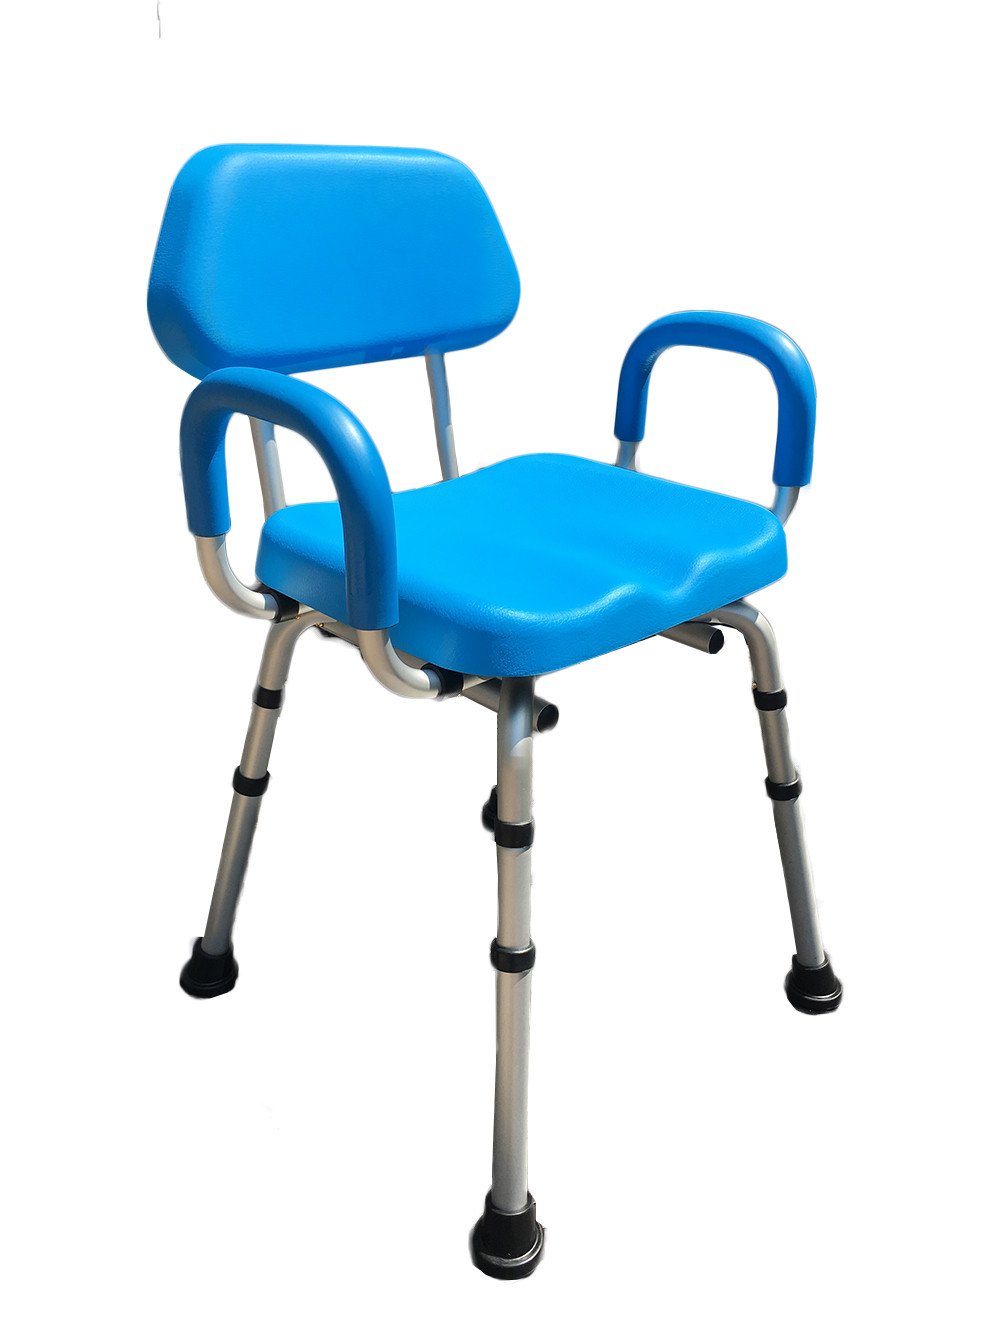 Comfortable Handicap Shower Seat